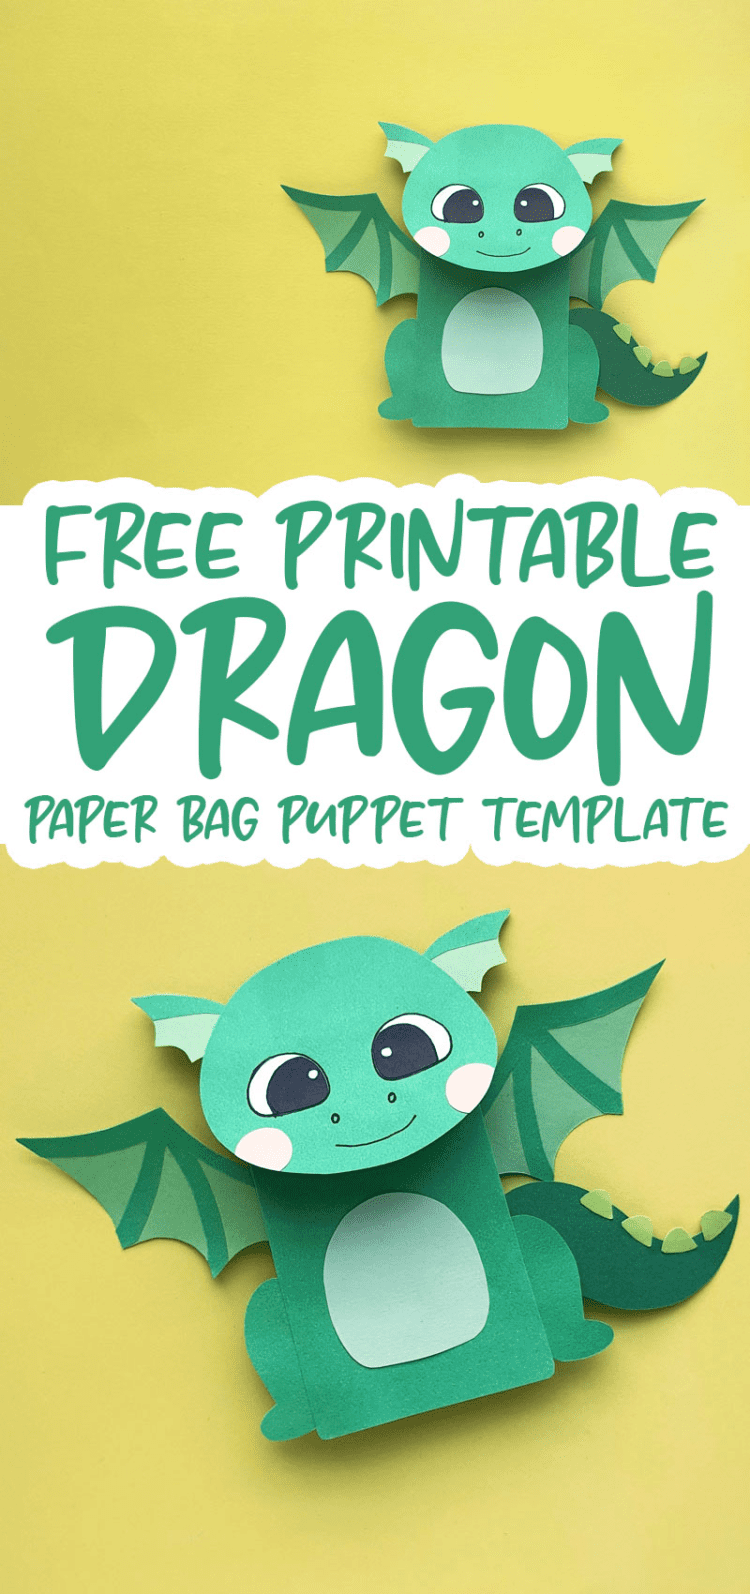 Paper Bag Dragon Puppet Images